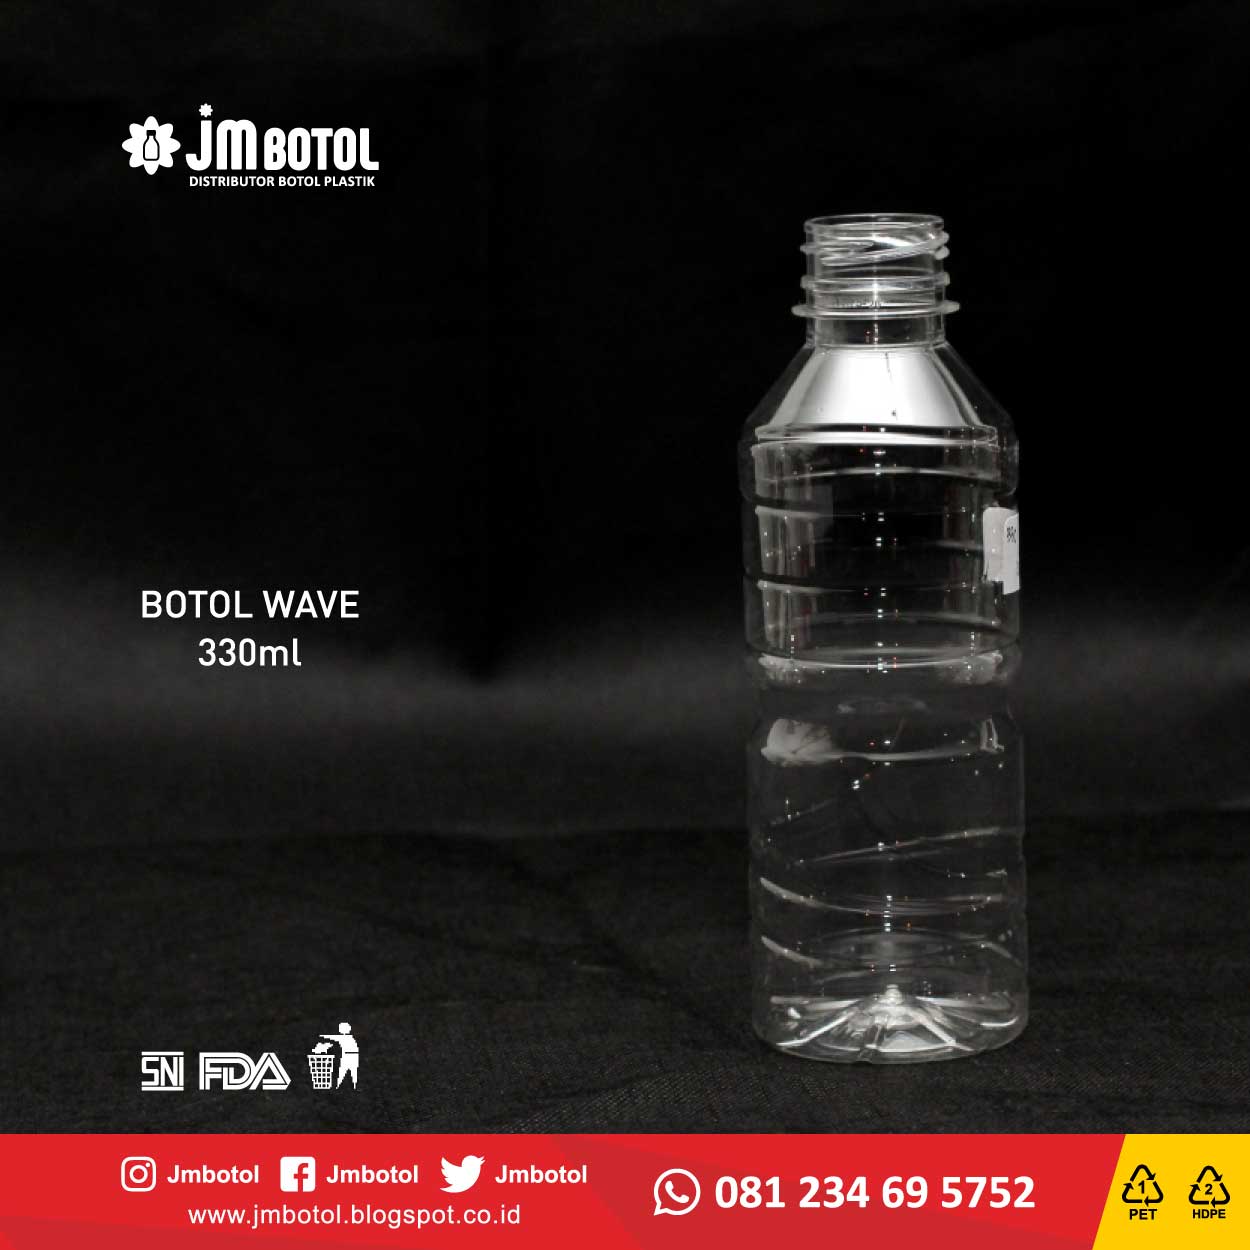 JM Botol  Distributor Pabrik Botol Plastik  Murah Surabaya 